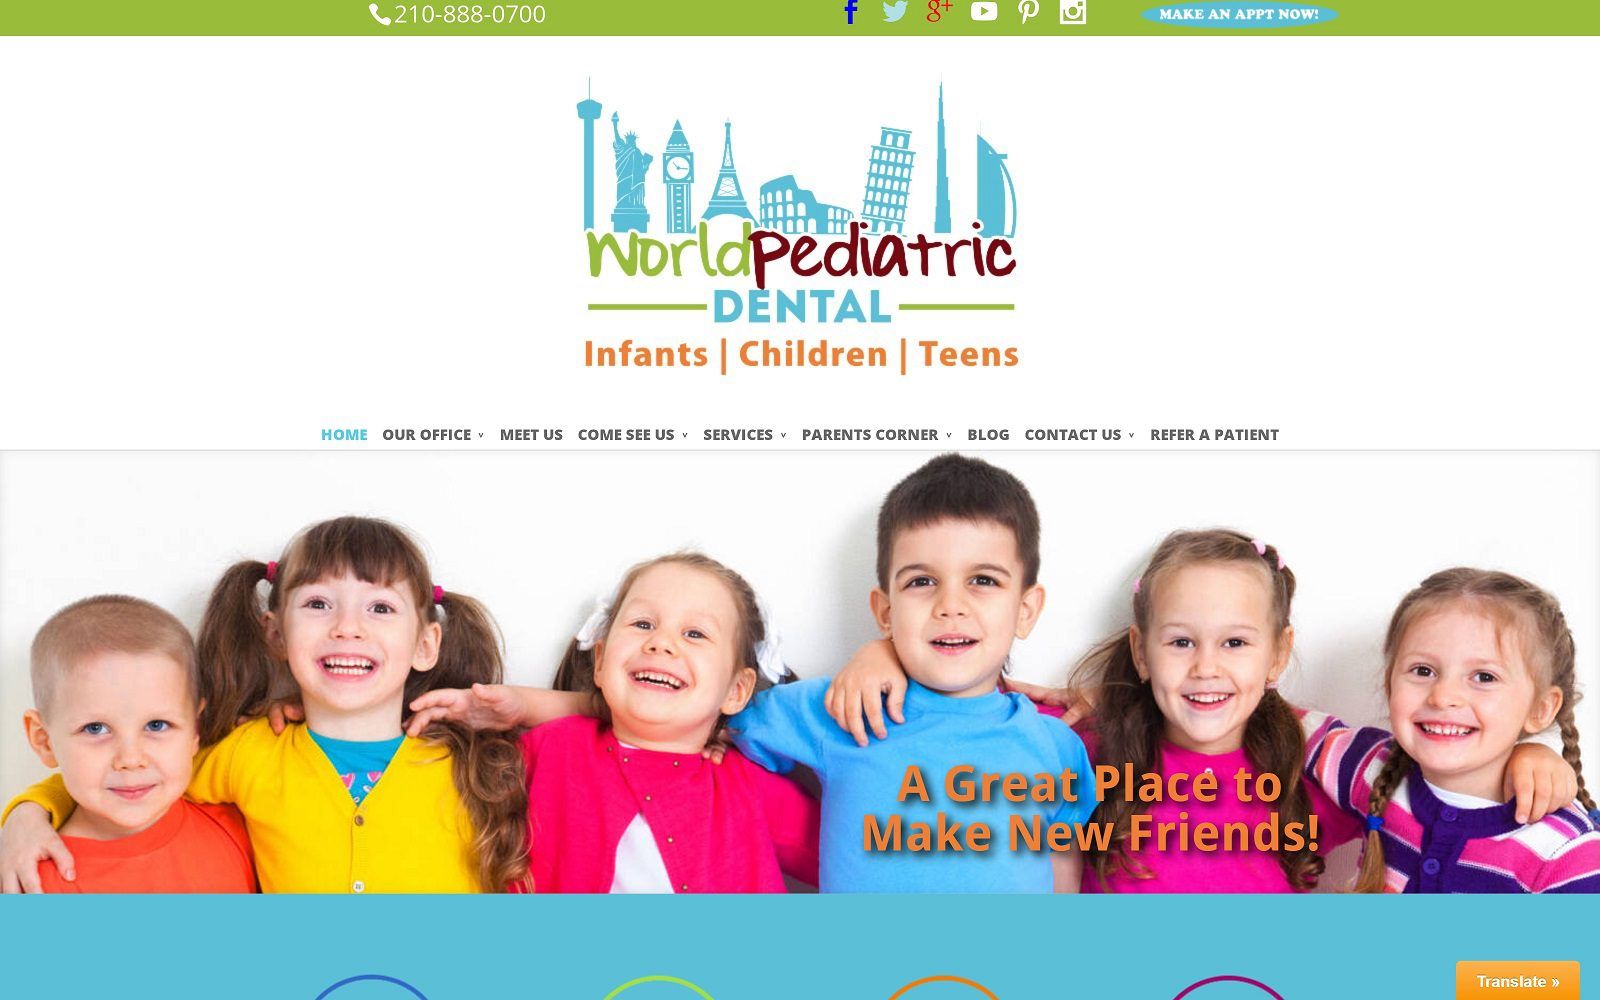 The screenshot of world pediatric dental website